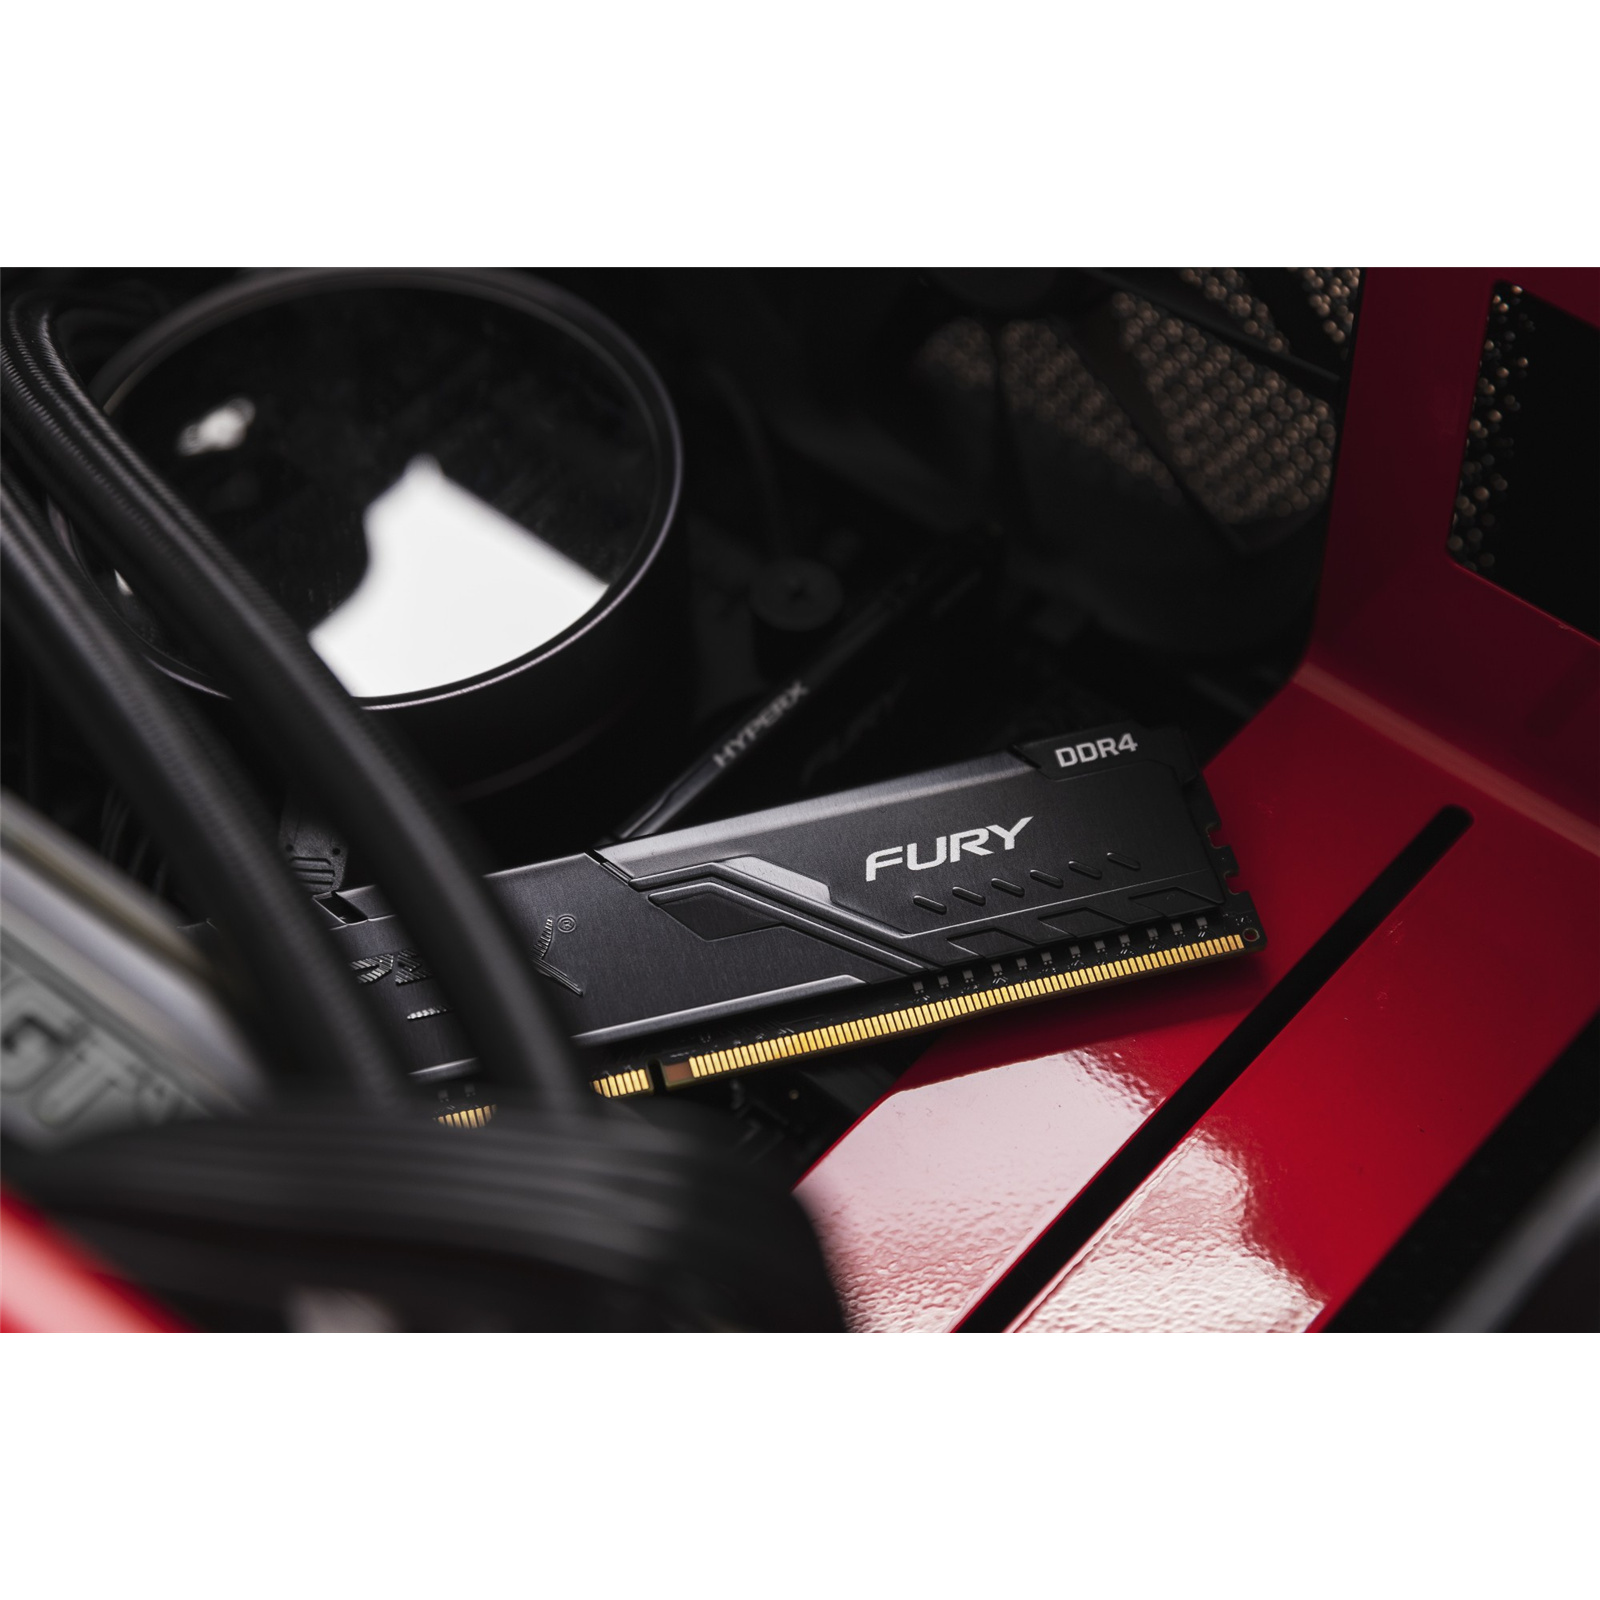 Buy the HyperX Fury 32GB RAM (2 x 16GB) DDR4-3200MHz, CL16 1.35V - Black...  ( HX432C16FB3K2/32 ) online - PBTech.com